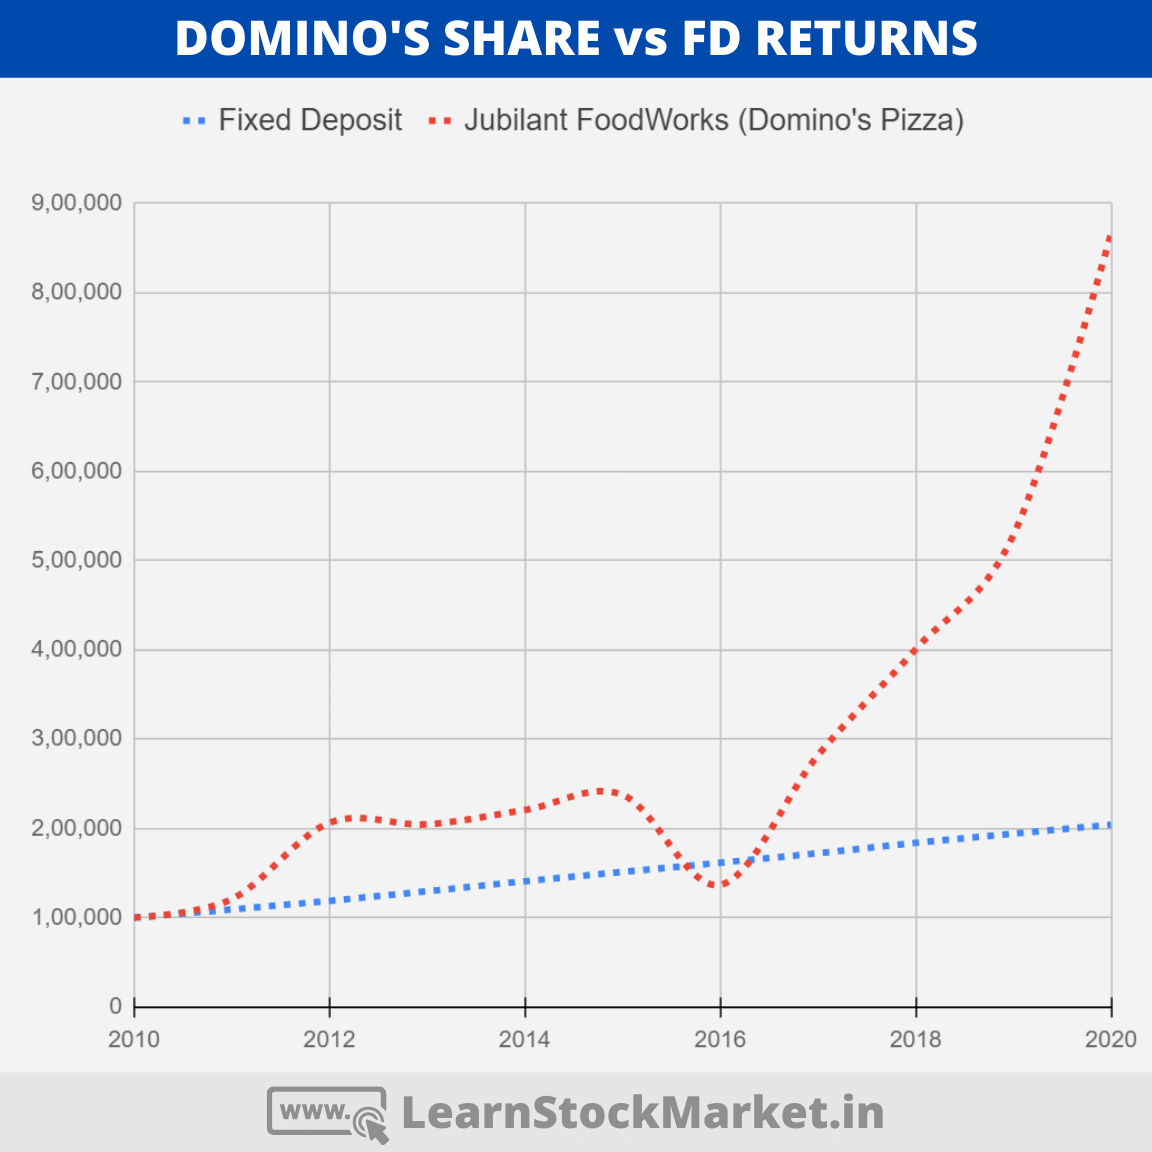 Dominos Jubilant FoodWorks vs FD Returns